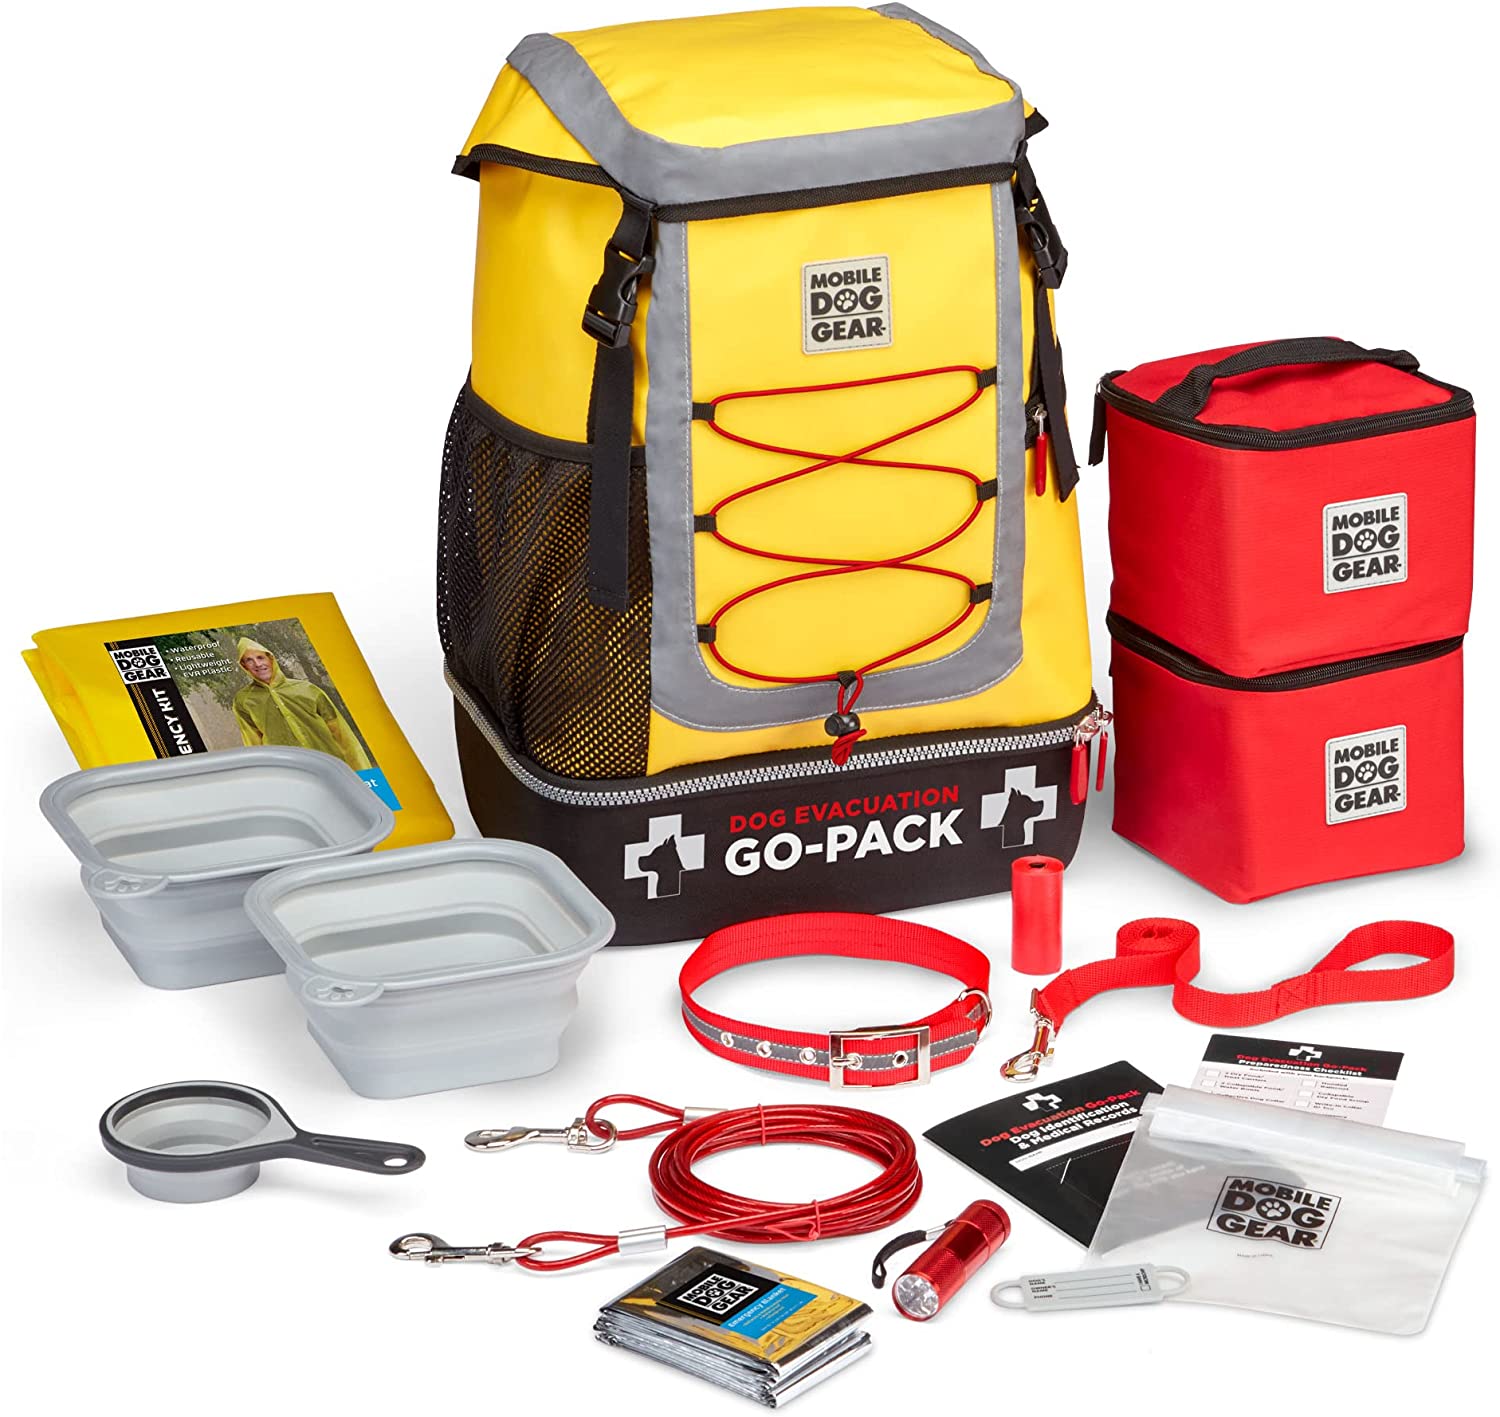 Mobile Dog Gear, Dog Evacuation Go-Pack – Deluxe Backpack Travel Bag + Emergency Supplies – 17 Pcs Bug-Out Survival Kit, Preloaded, Pet Emergency Kit for Disaster Preparedness (Small Dog)